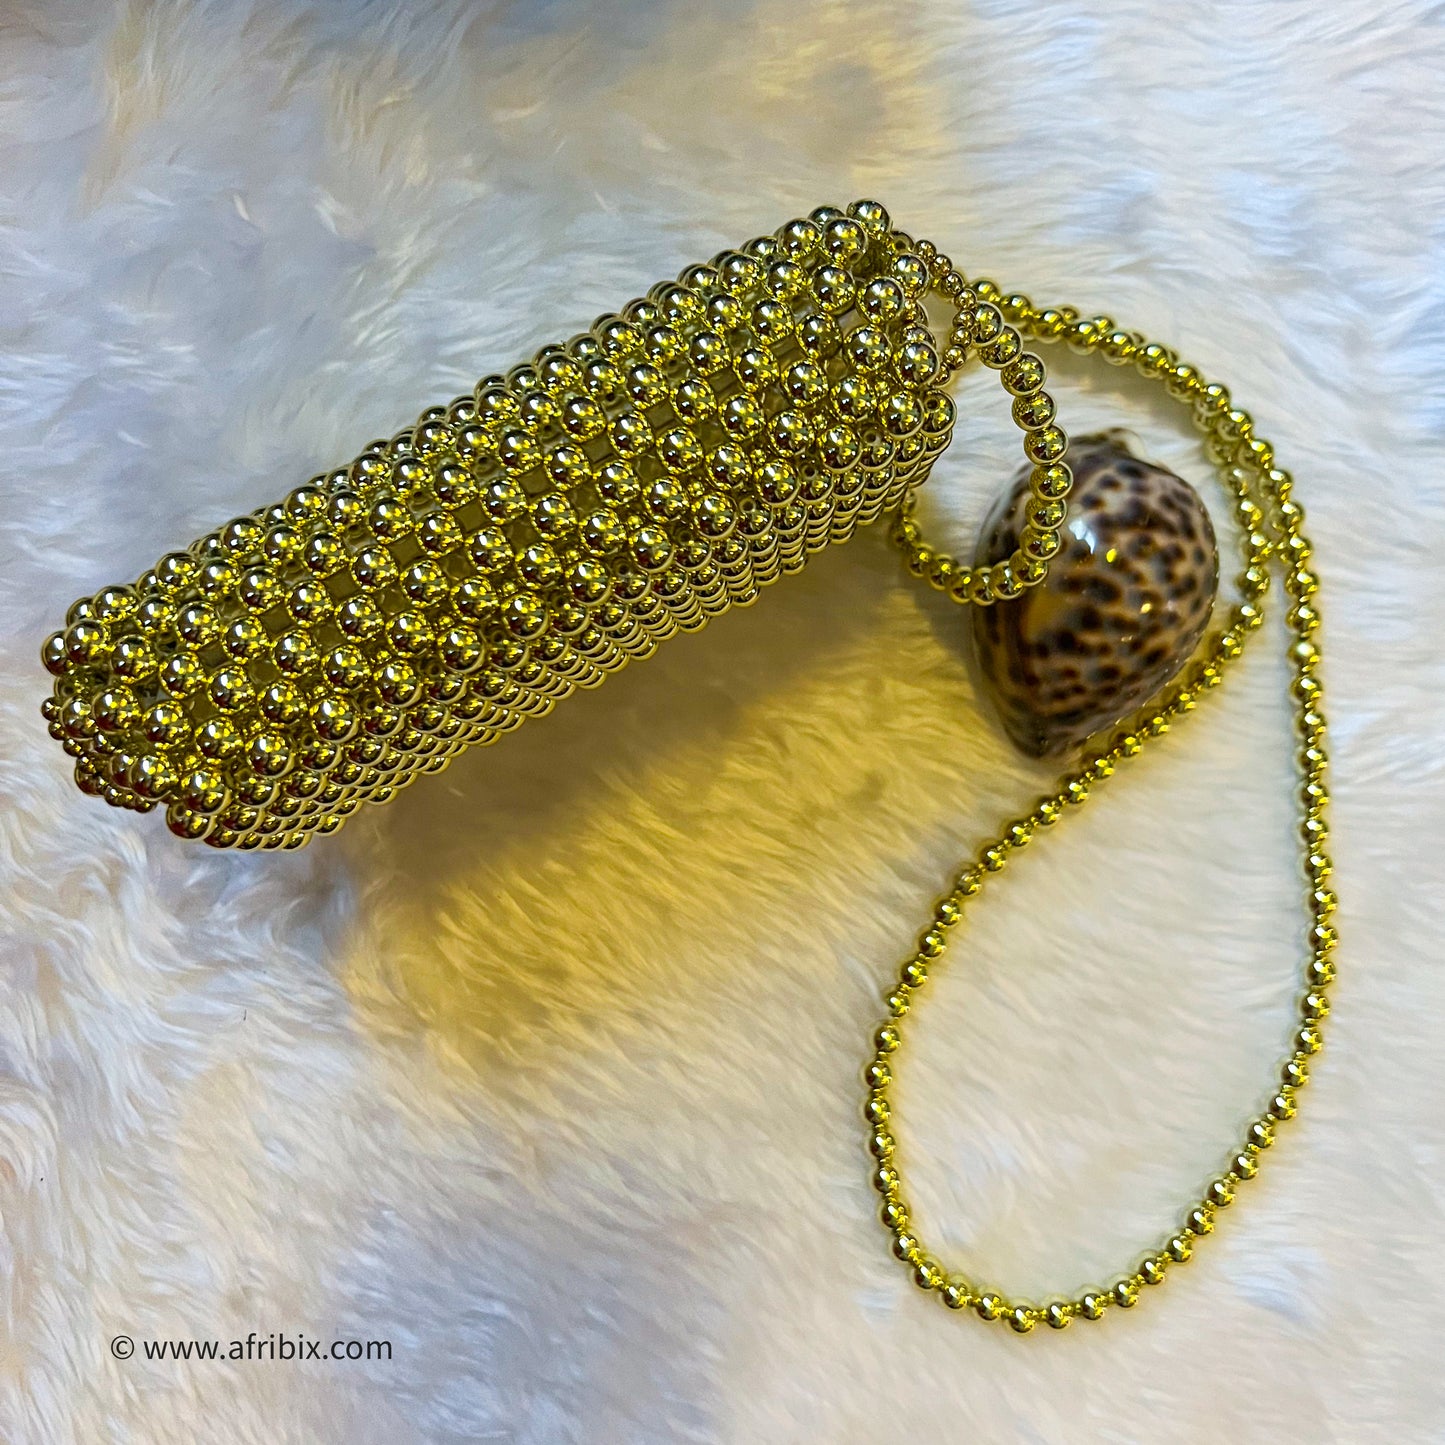 Gold Beads Mini Clutch Hand Bag